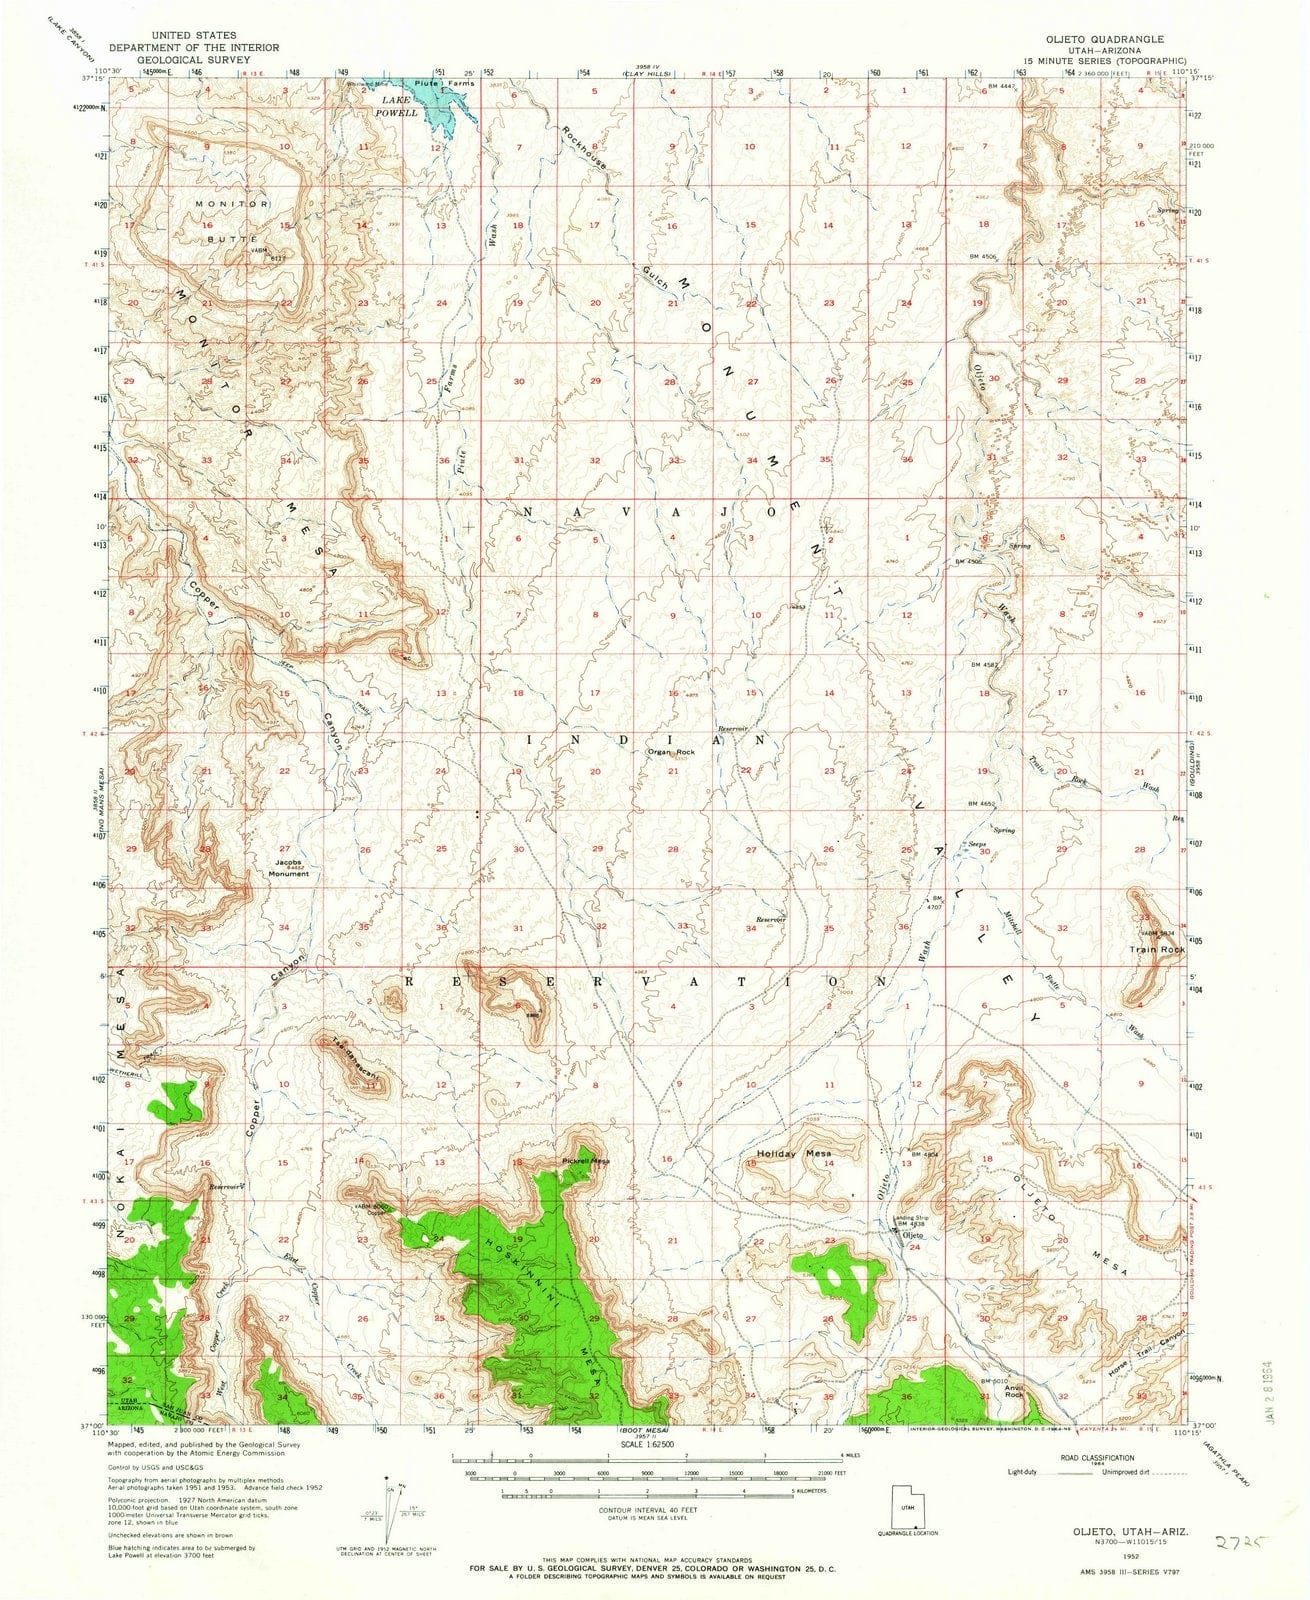 1952 Oljeto, UT - Utah - USGS Topographic Map